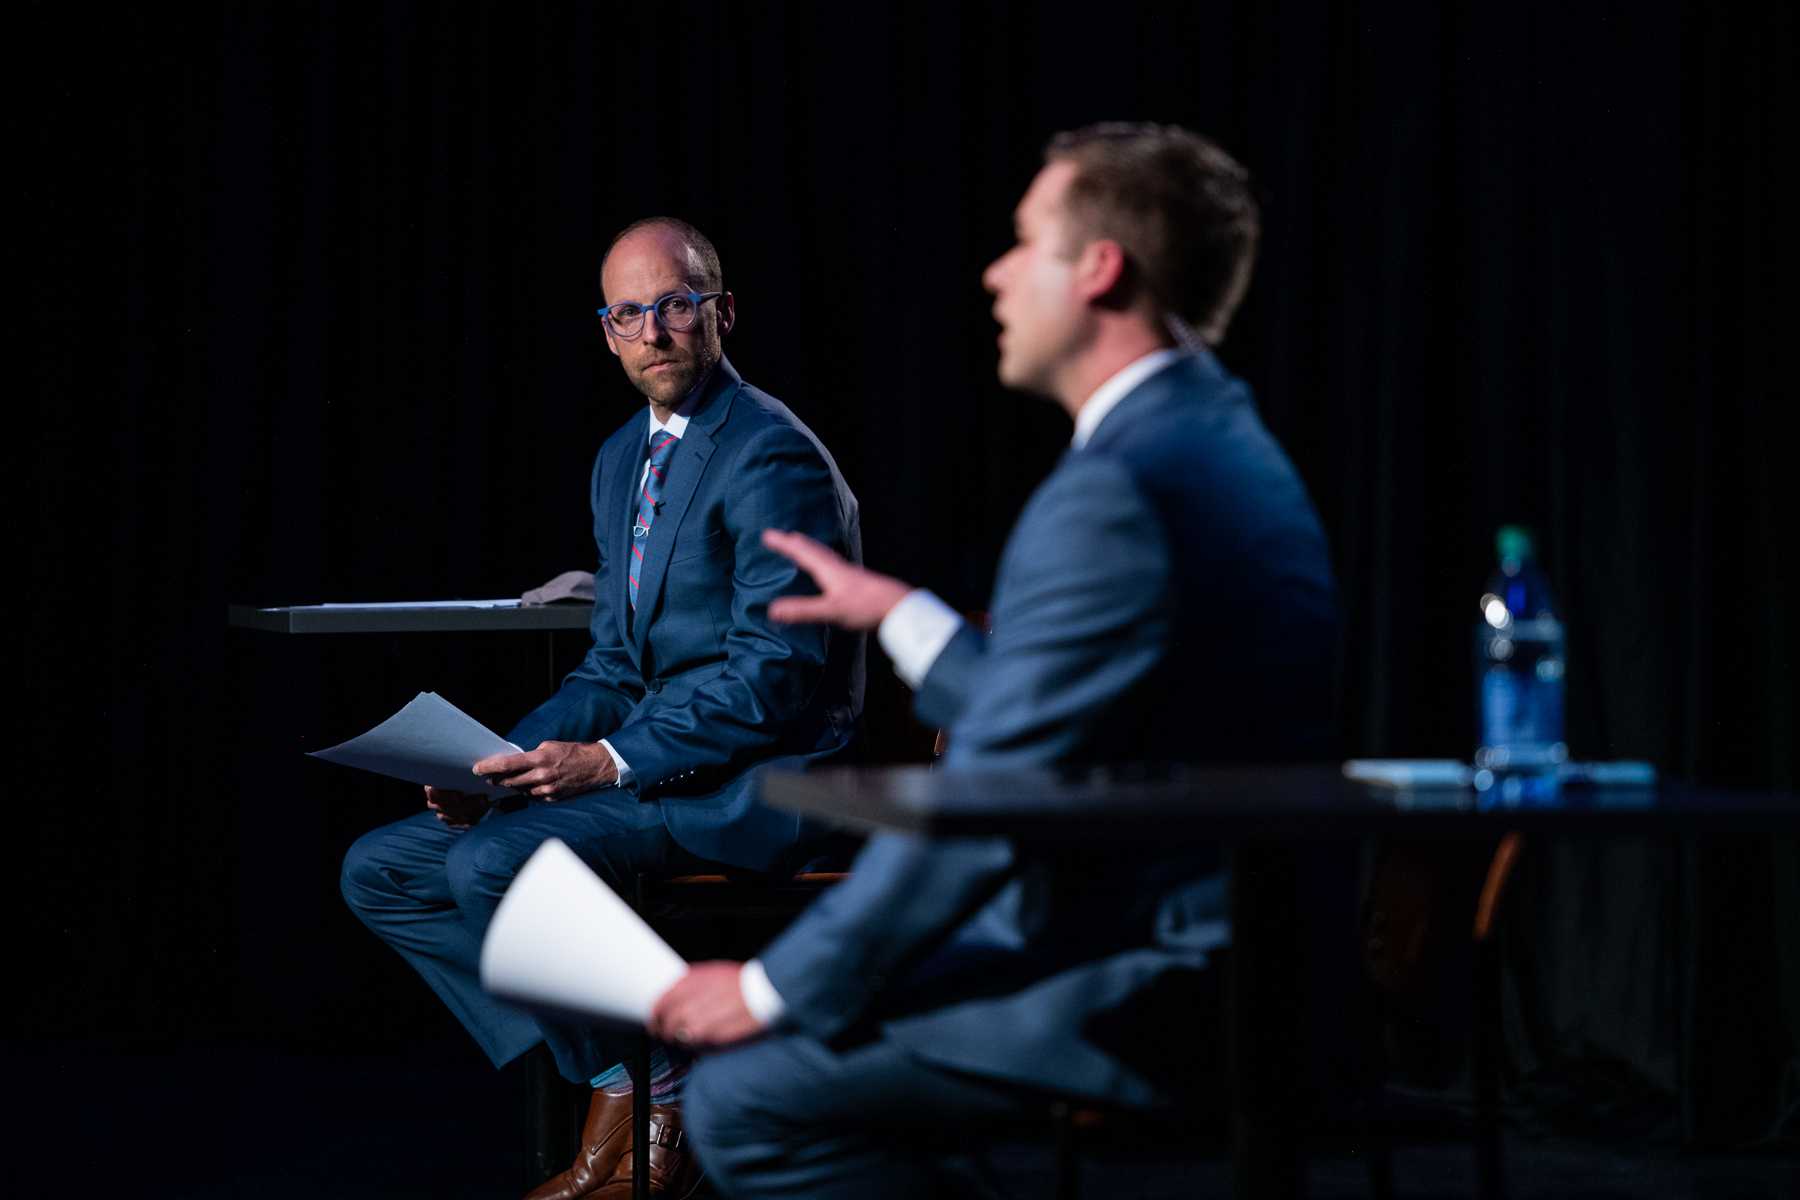 Marshall Zelinger and Kyle Clark moderating the final 2020 Colorado senator debate